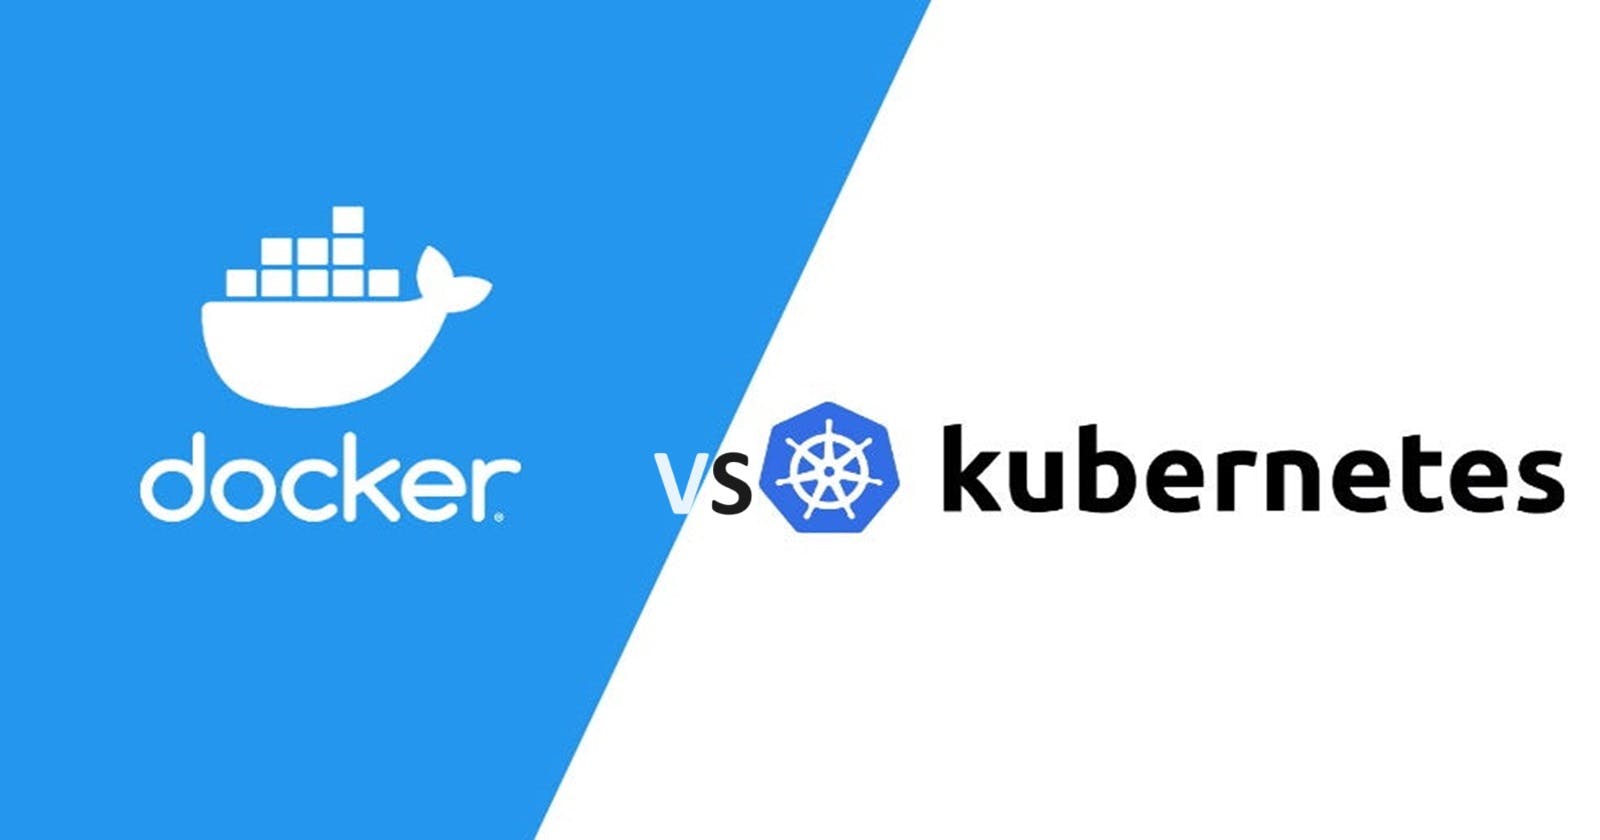 🐳 Docker vs. ⚓ Kubernetes: The Battle of Container Platforms 🔥